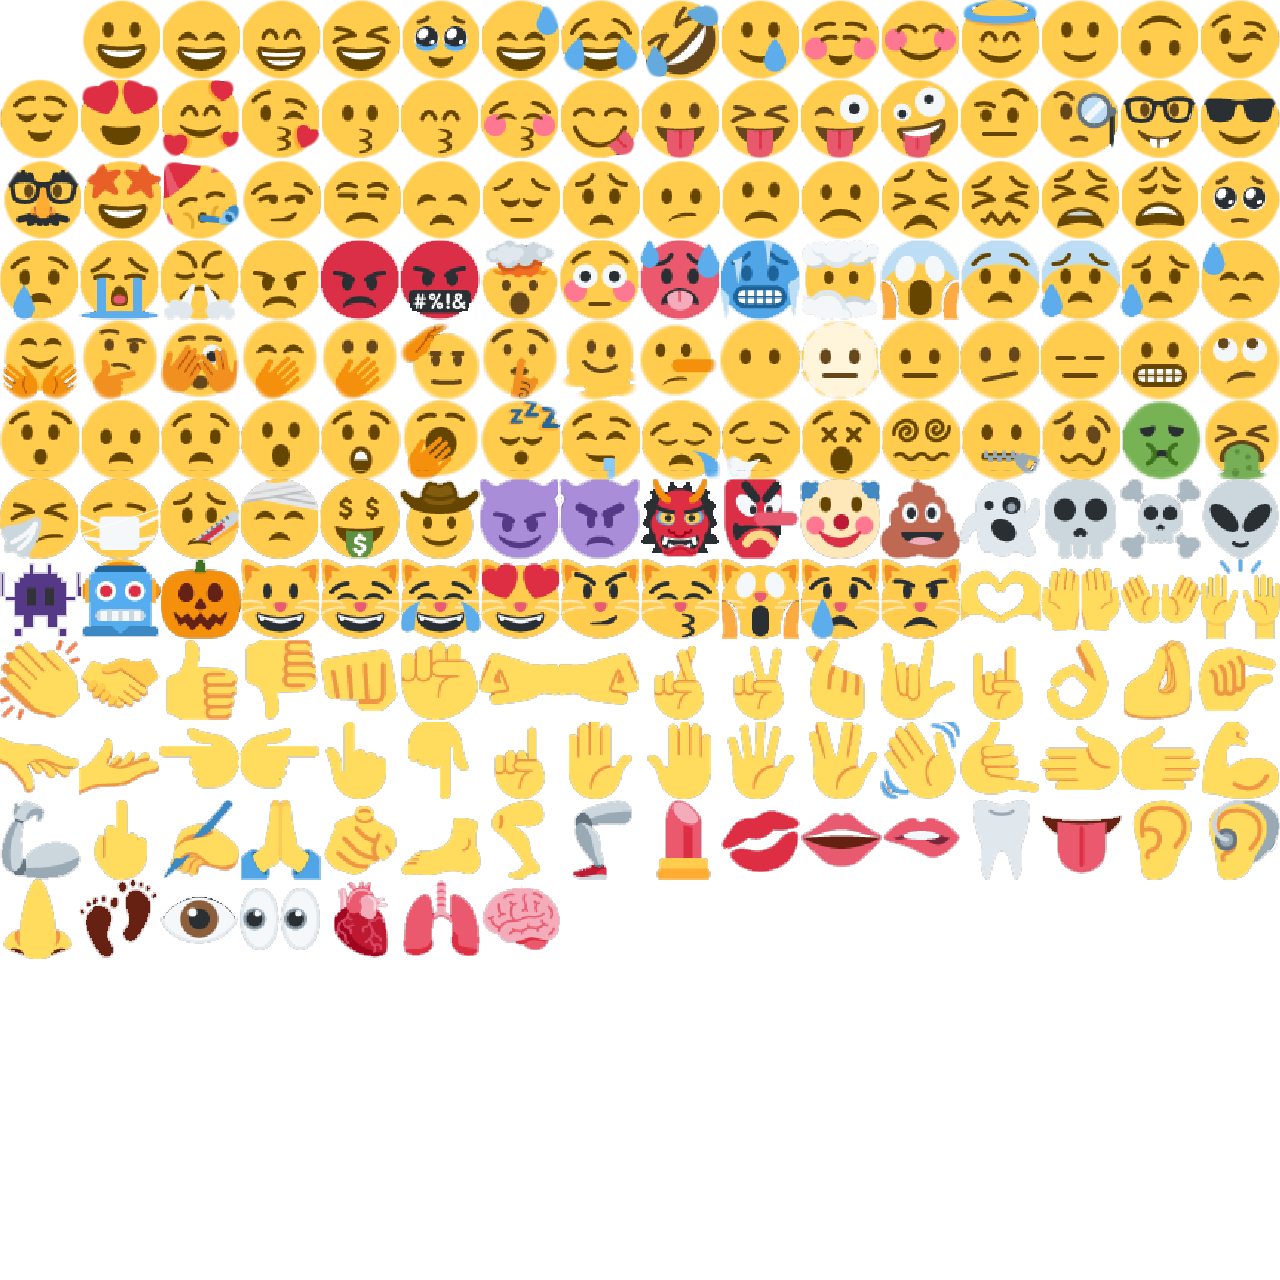 discord emojis 1-182 Teeworlds mapres